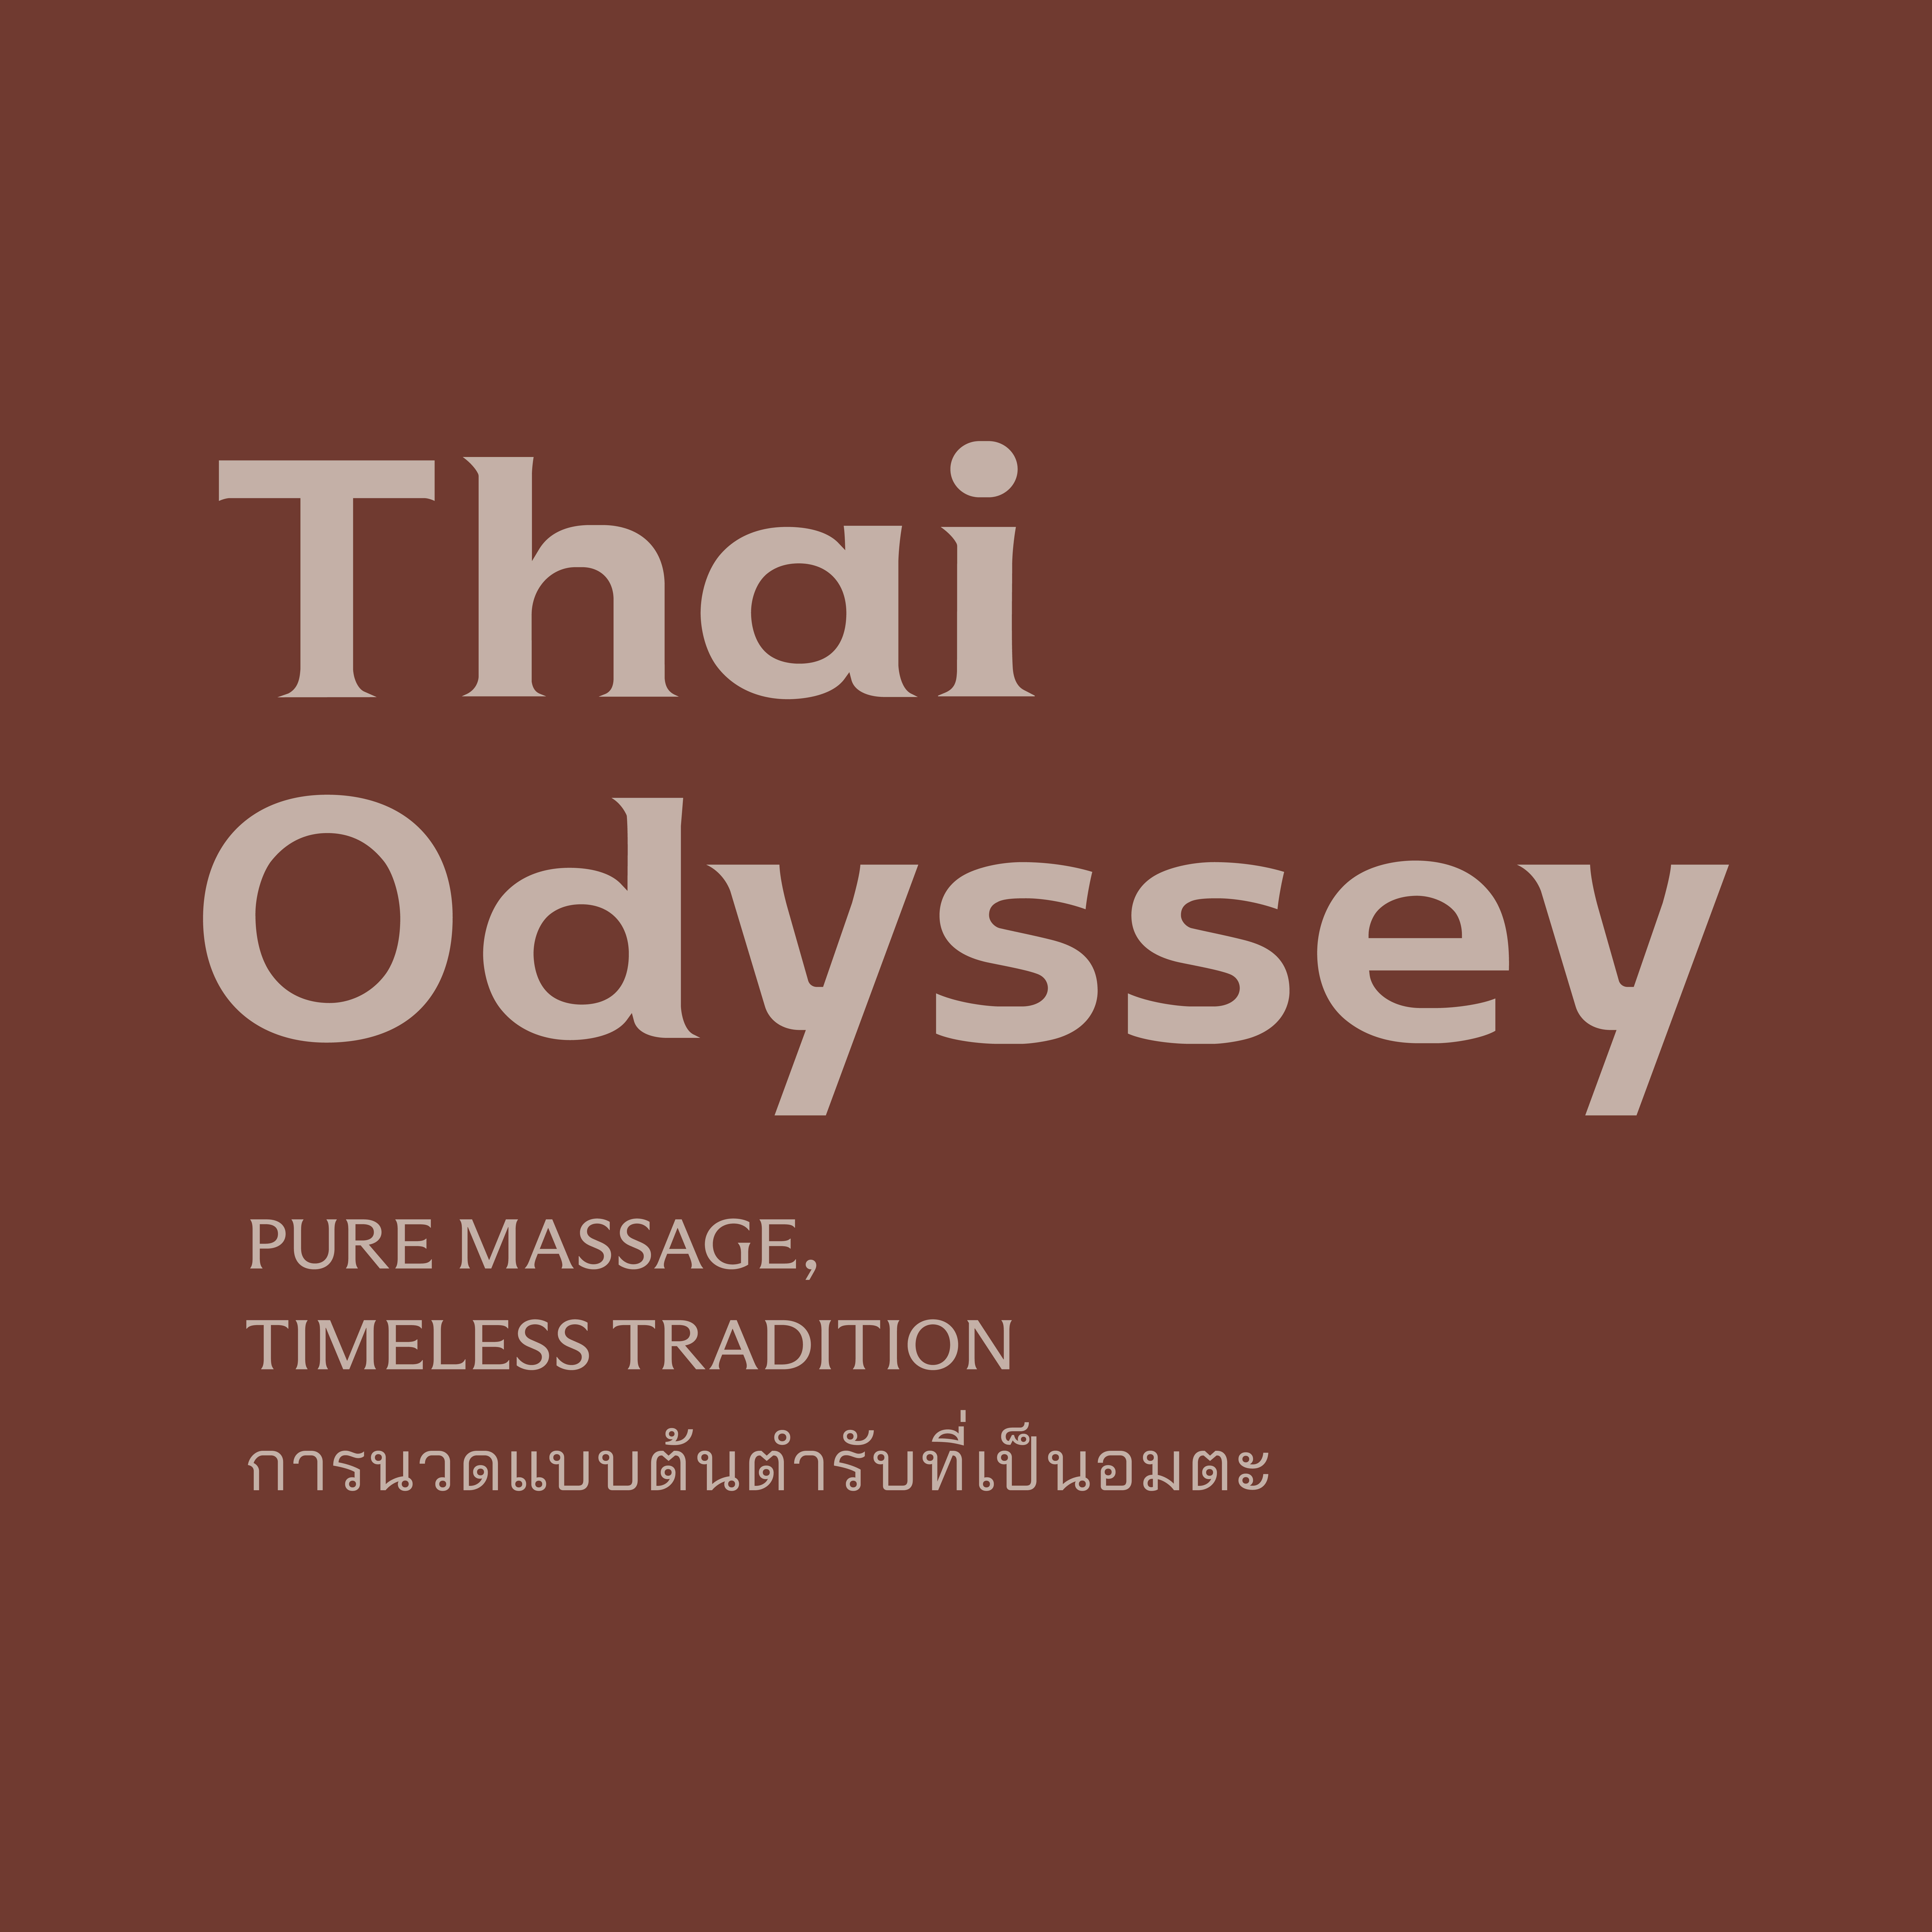 THAI ODYSSEY